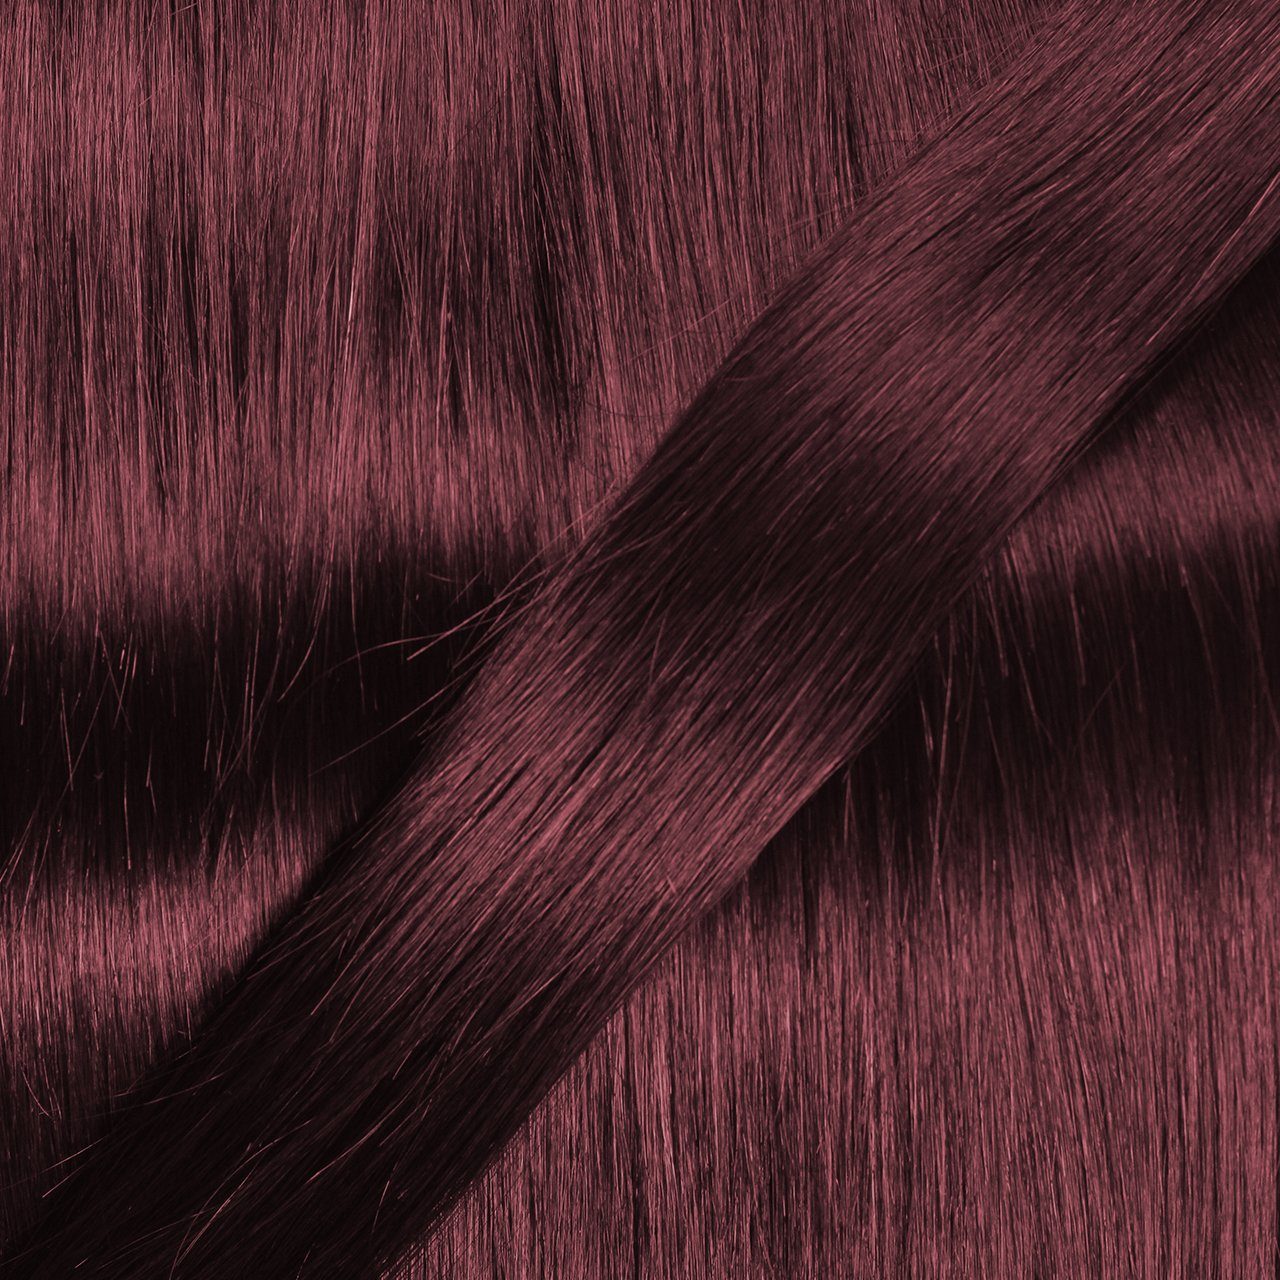 Hellbraun 1g Violett #55/66 Loops 50cm - Microring glatt hair2heart Echthaar-Extension